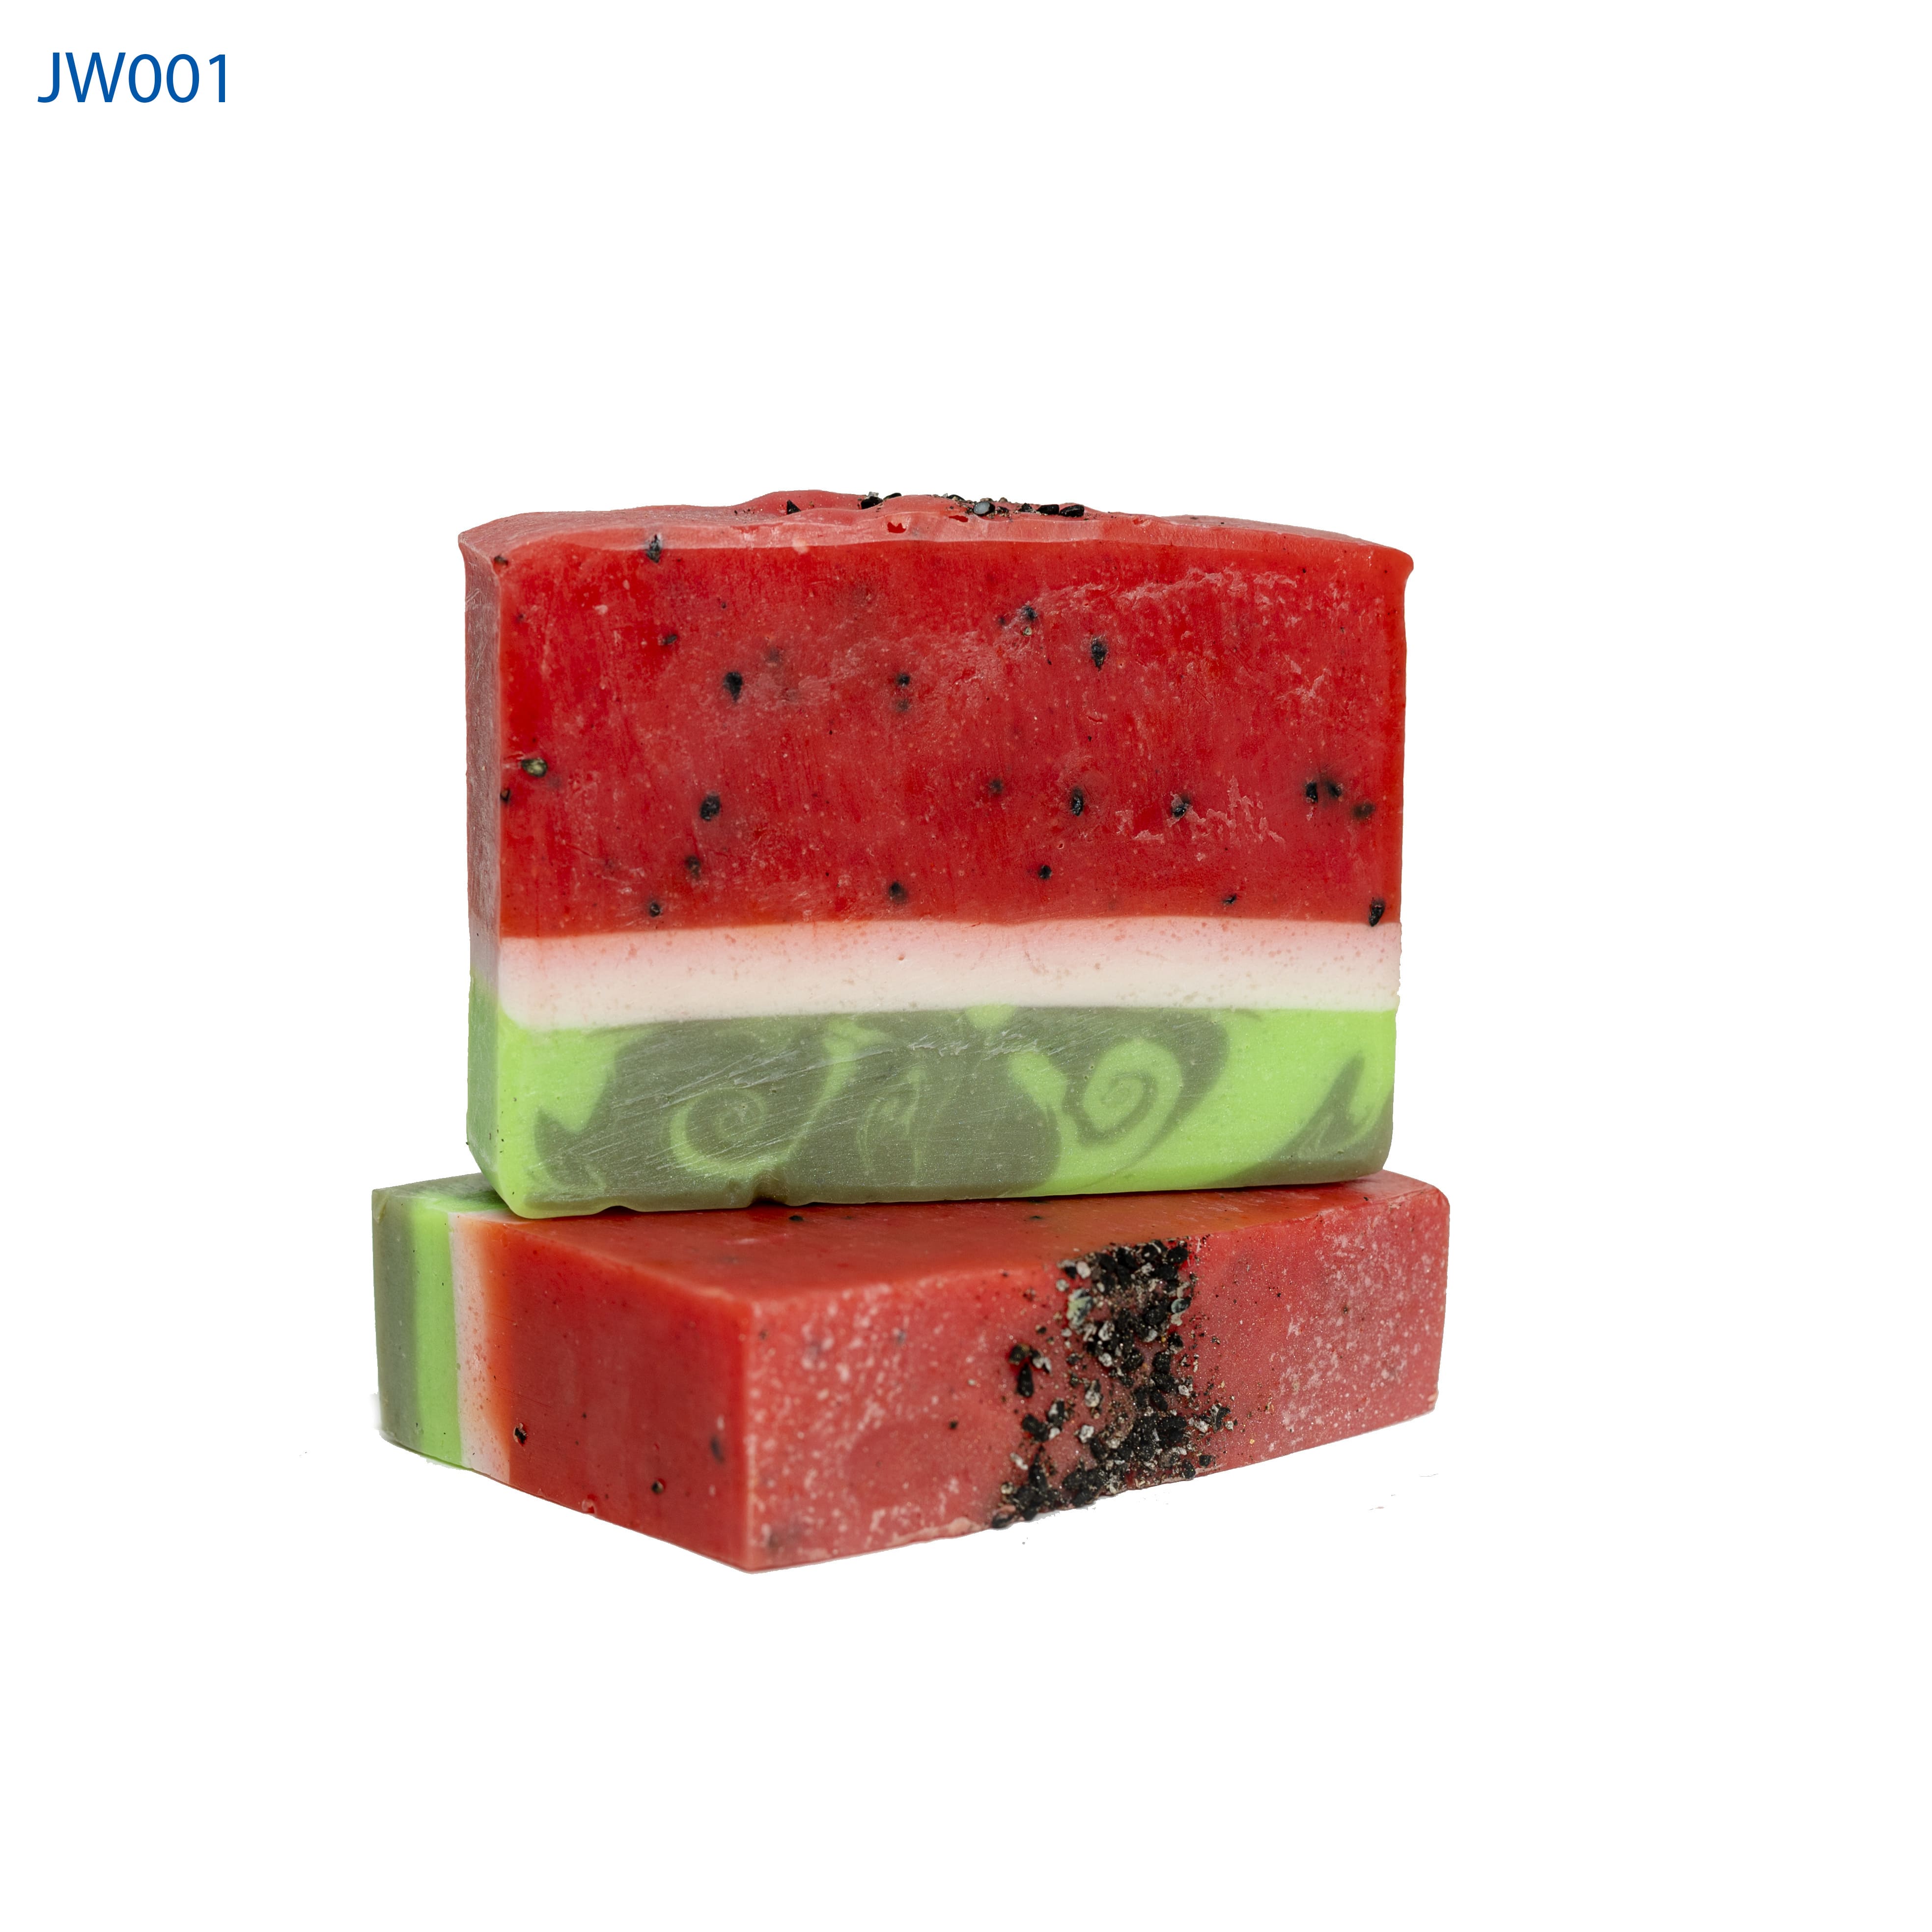 Emy's Soap - Juicy Watermelon Soap Bar - 140 gm - 1 Piece